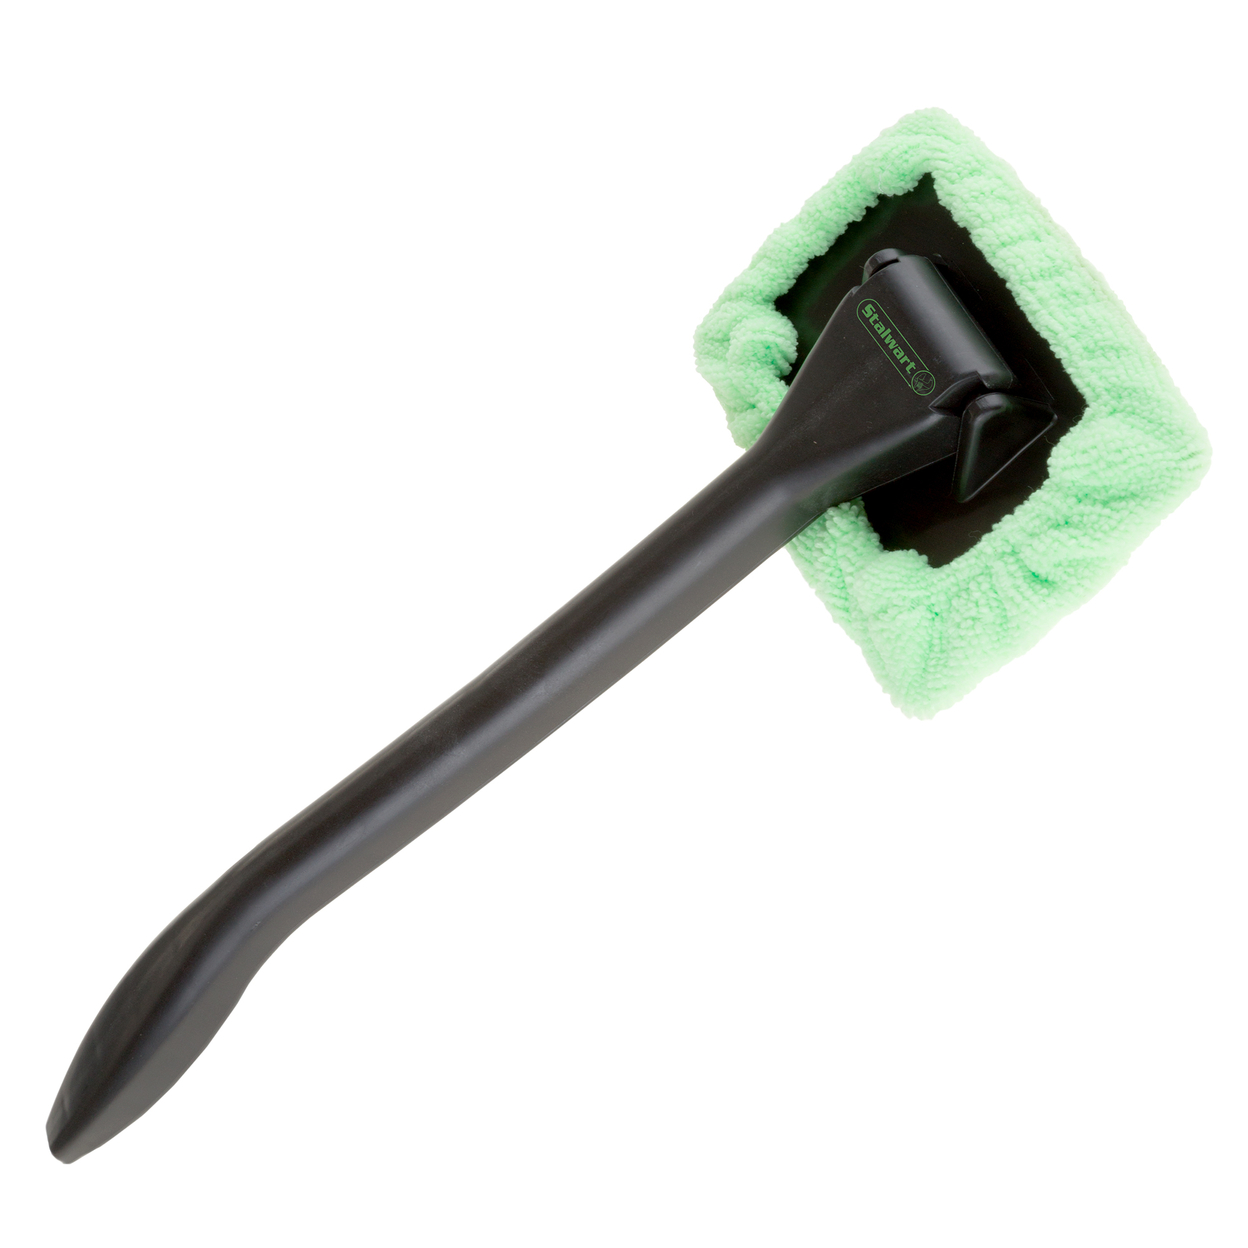 Windshield And Window Cleaner Microfiber Cloth Tool Handle Pivoting Head, Green